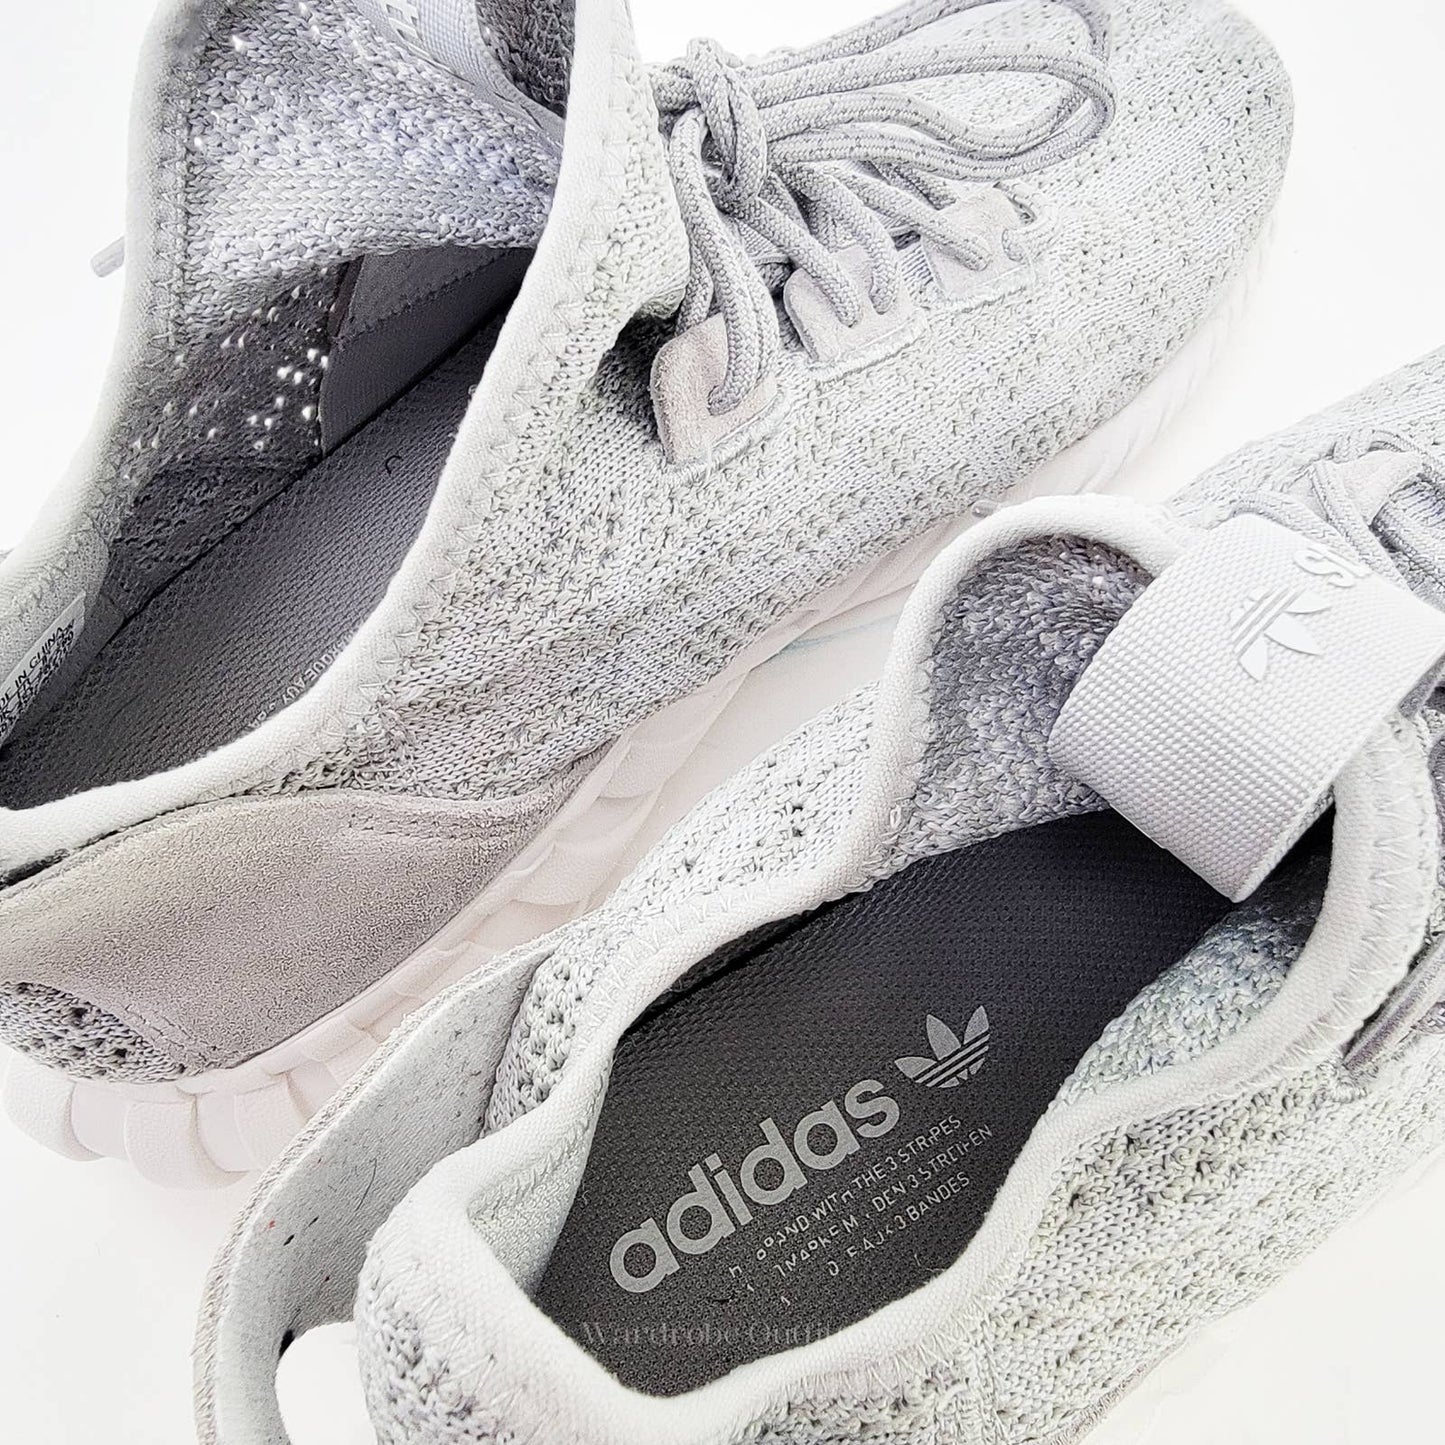 adidas Tubular Doom Sock Primeknit Grey Sneakers - 11